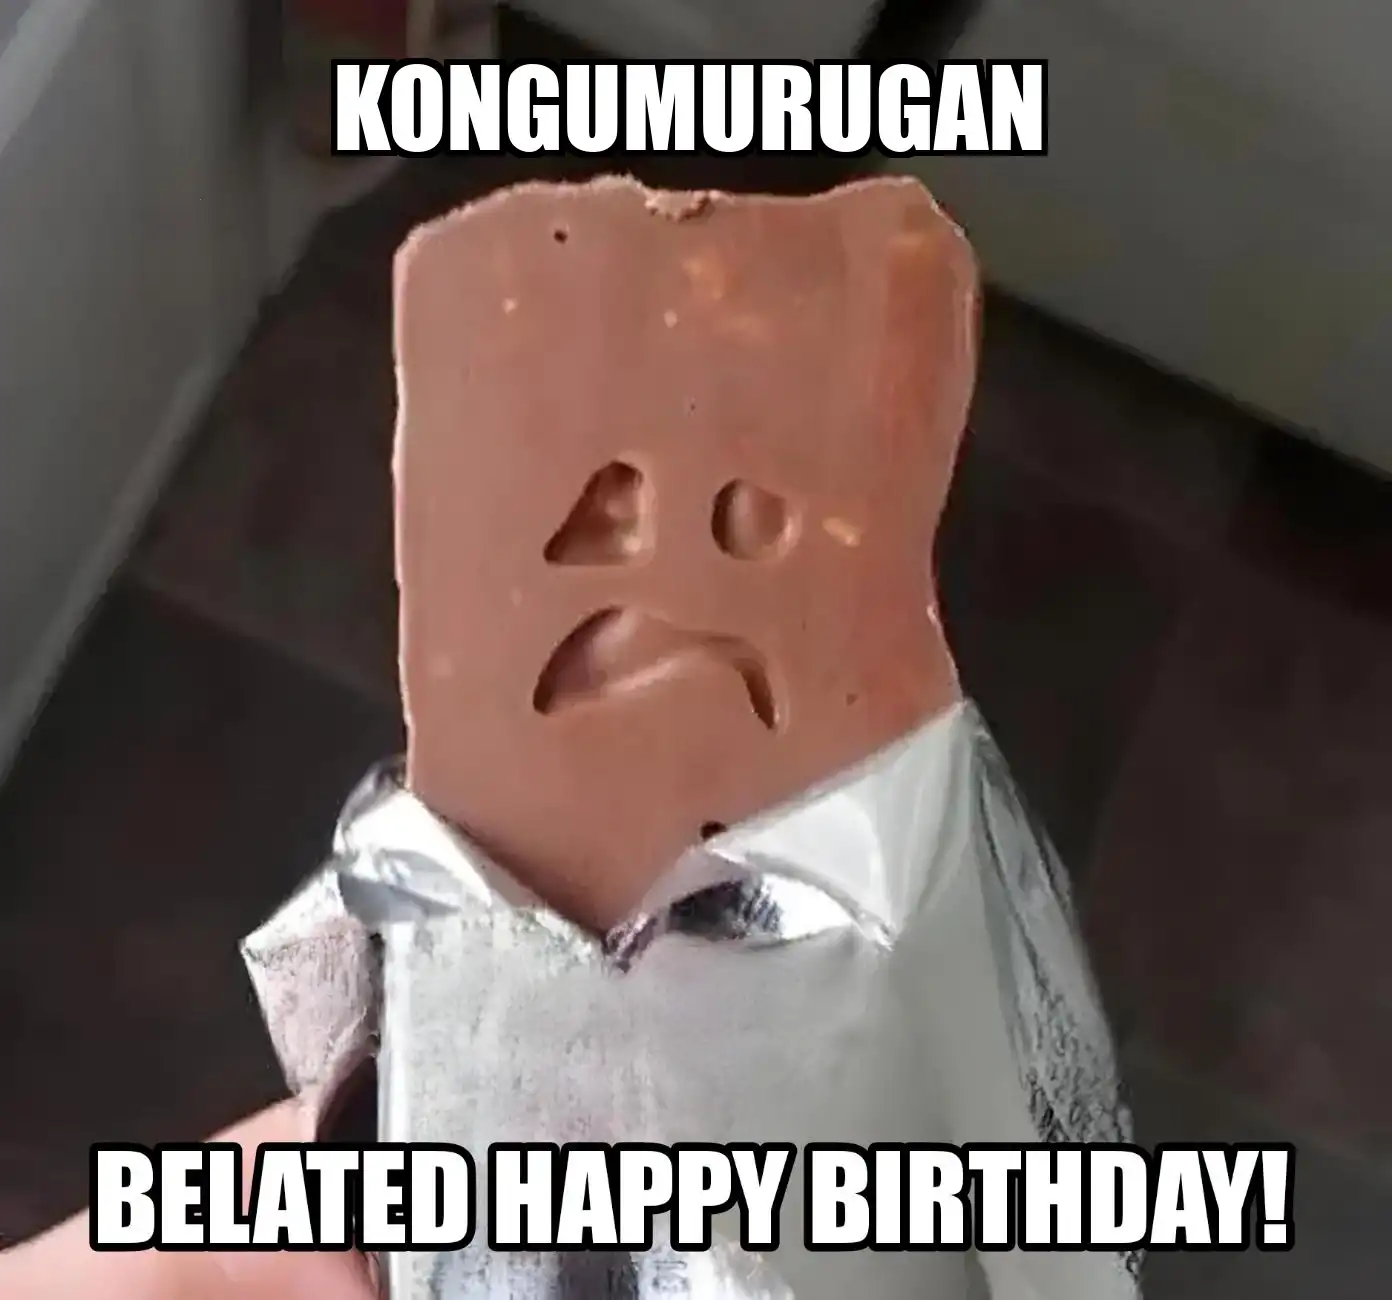 Happy Birthday Kongumurugan Belated Happy Birthday Meme